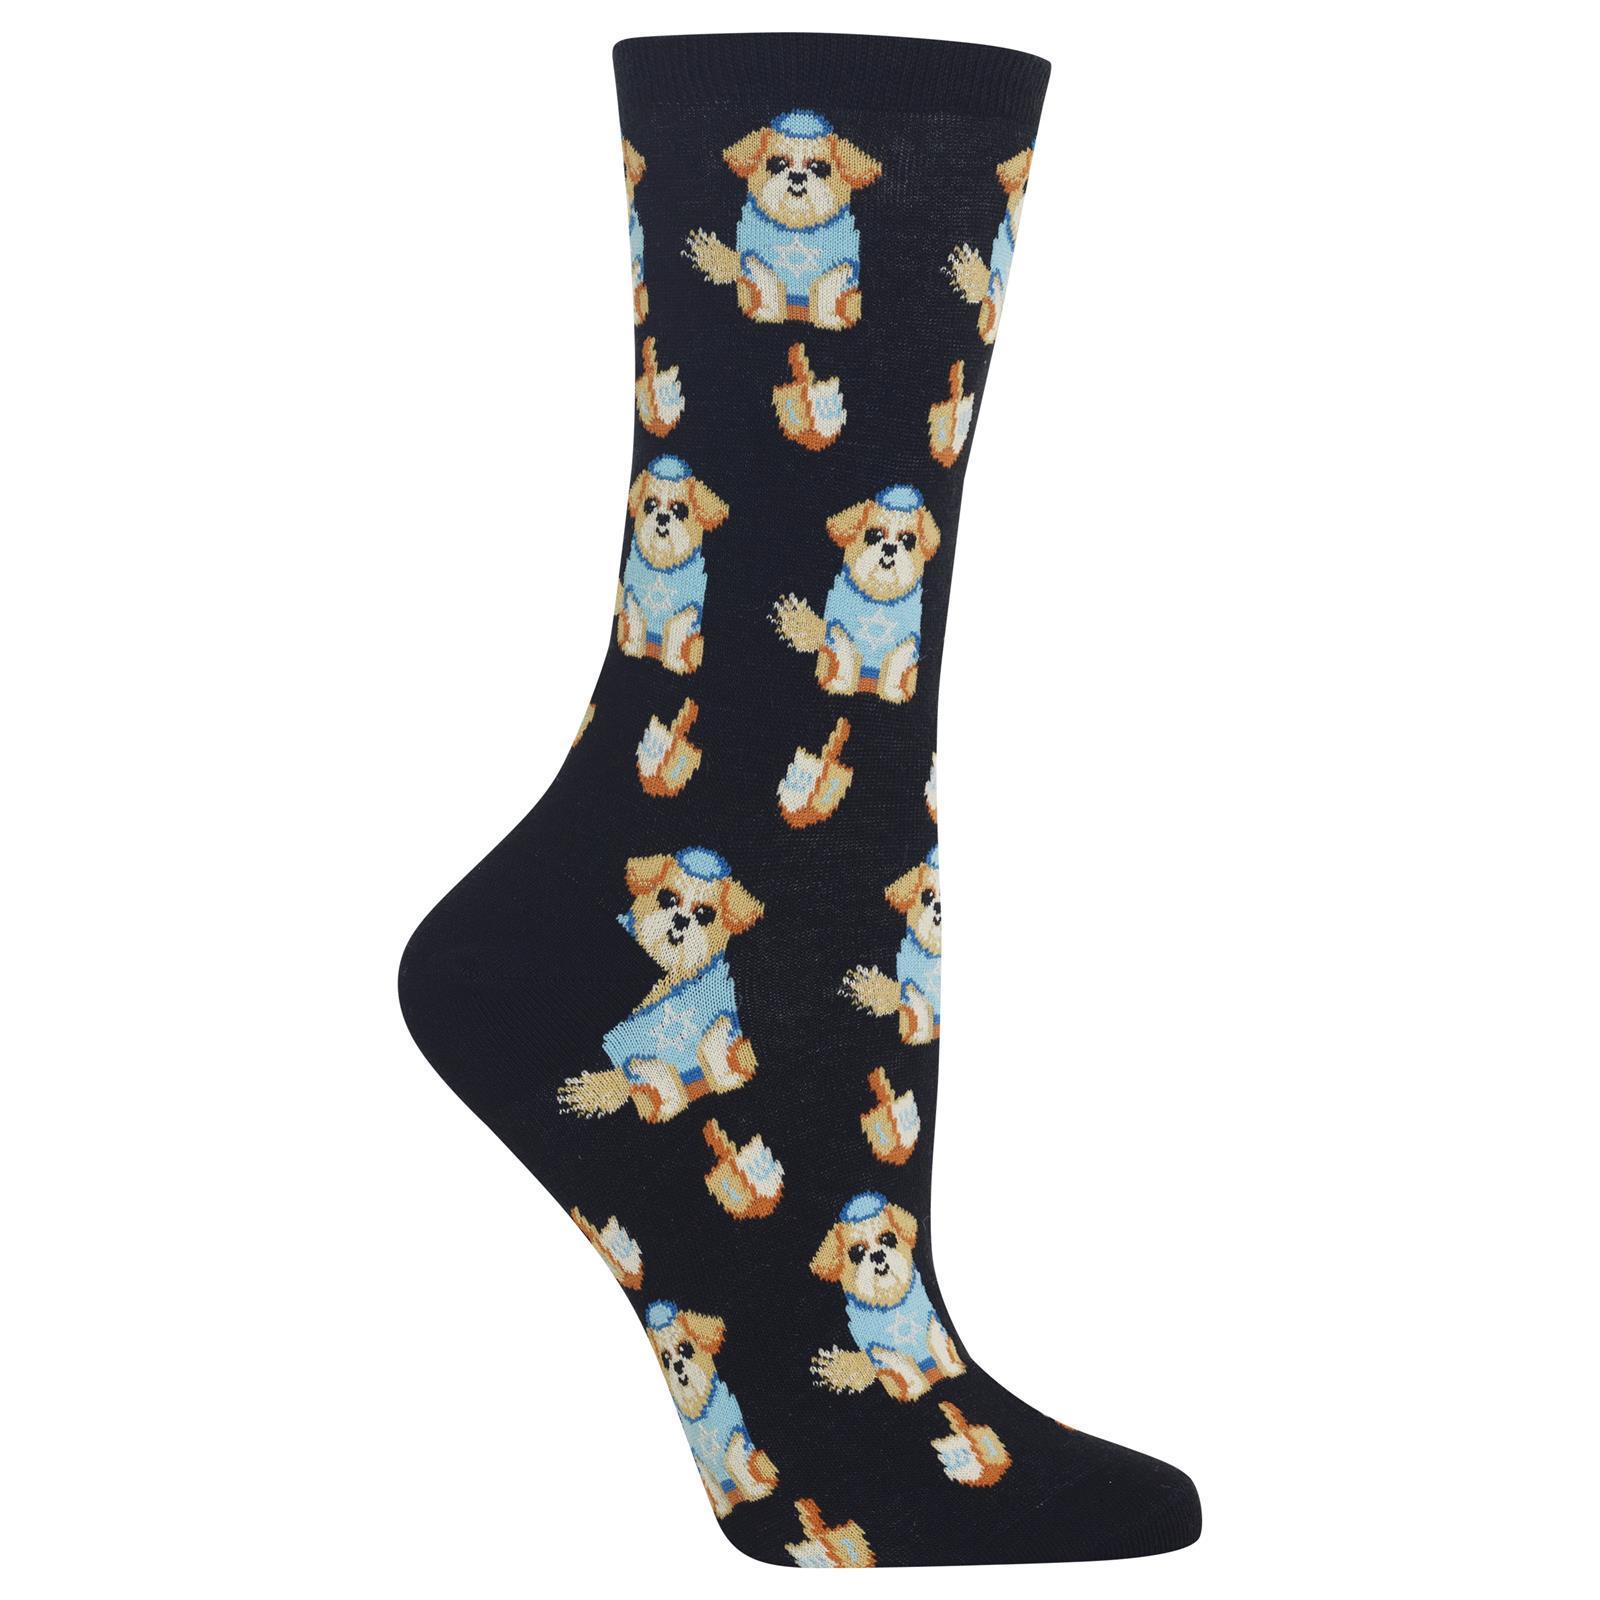 Hot Sox Socks Black / One Size Women's Dreidel Dog Crew Socks